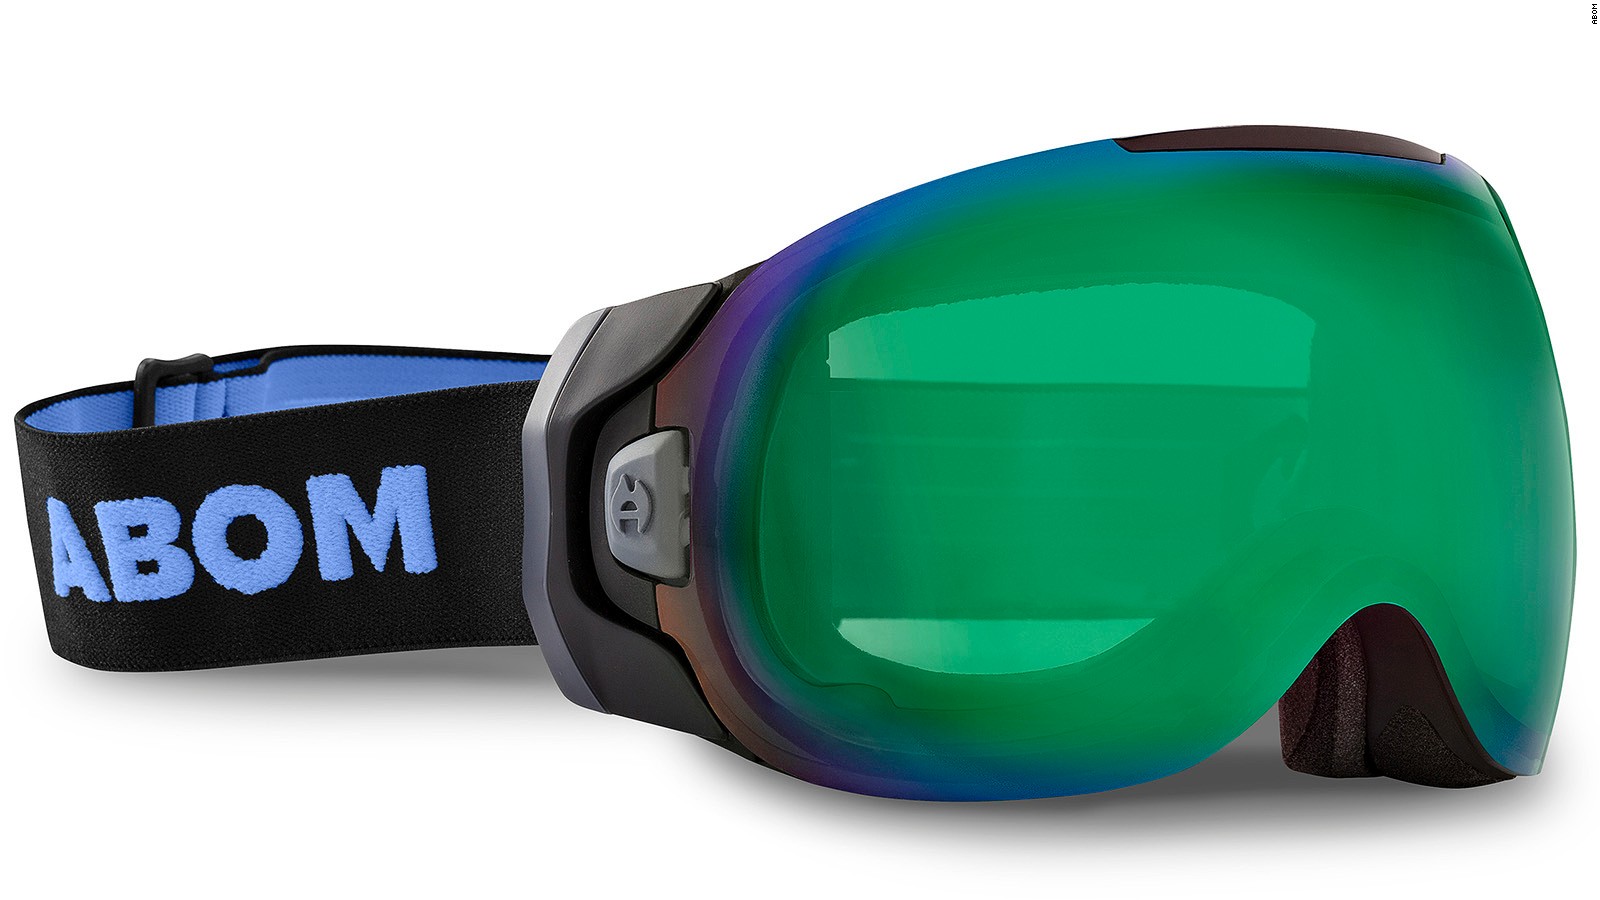 Alpland Ski Goggles Protective Glasses Alpine Sport Glasses SNOWBOARD Goggles Anti Fog 